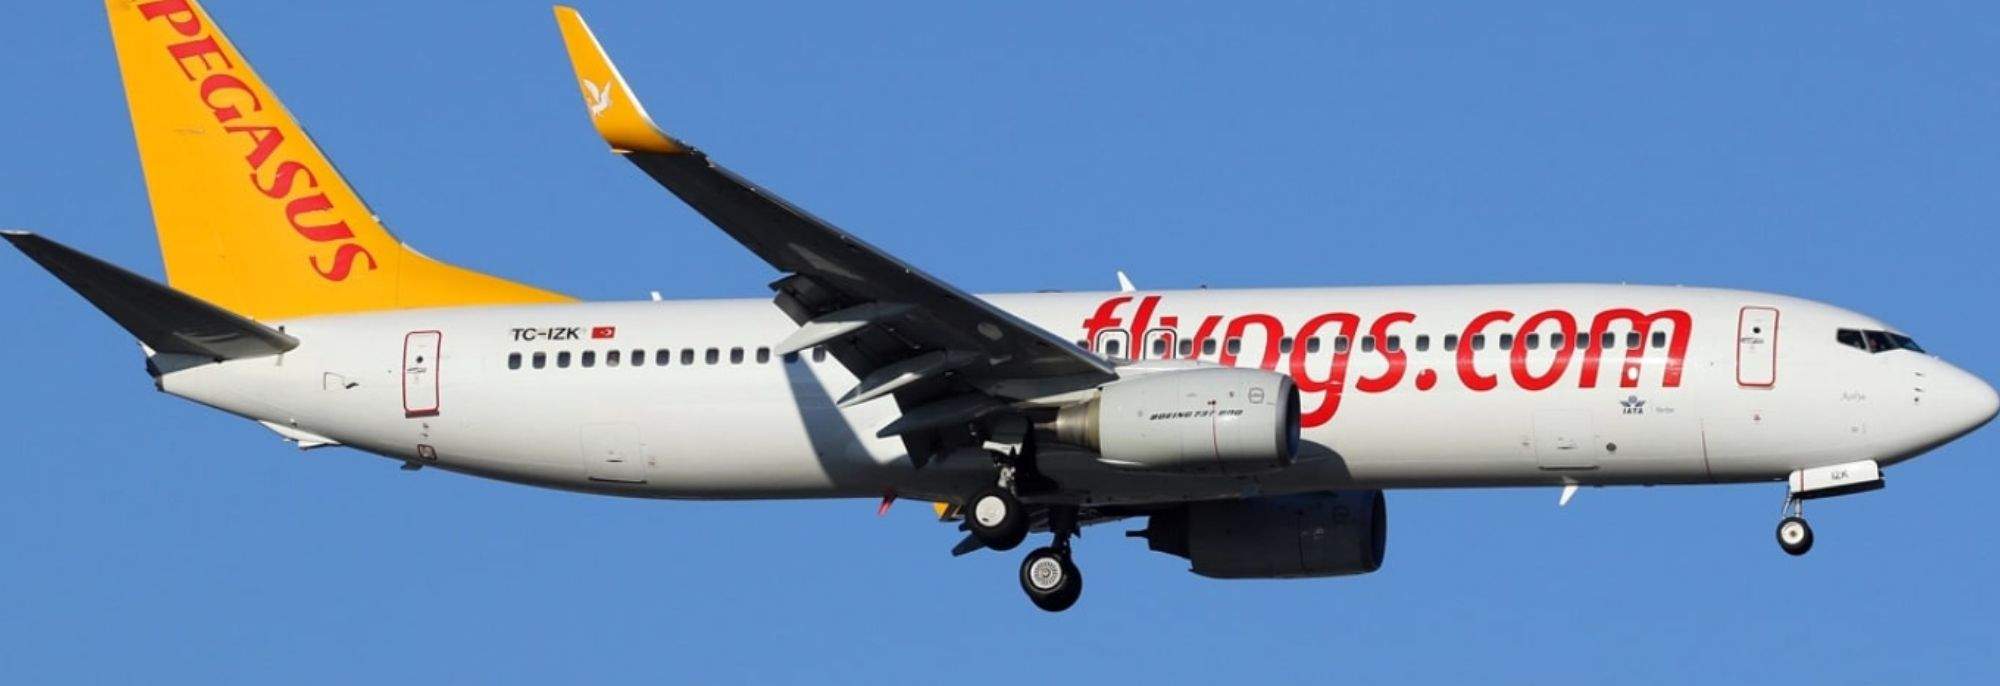 Turkey-Poland Connection: Pegasus Airlines Lands at Krakow Airport